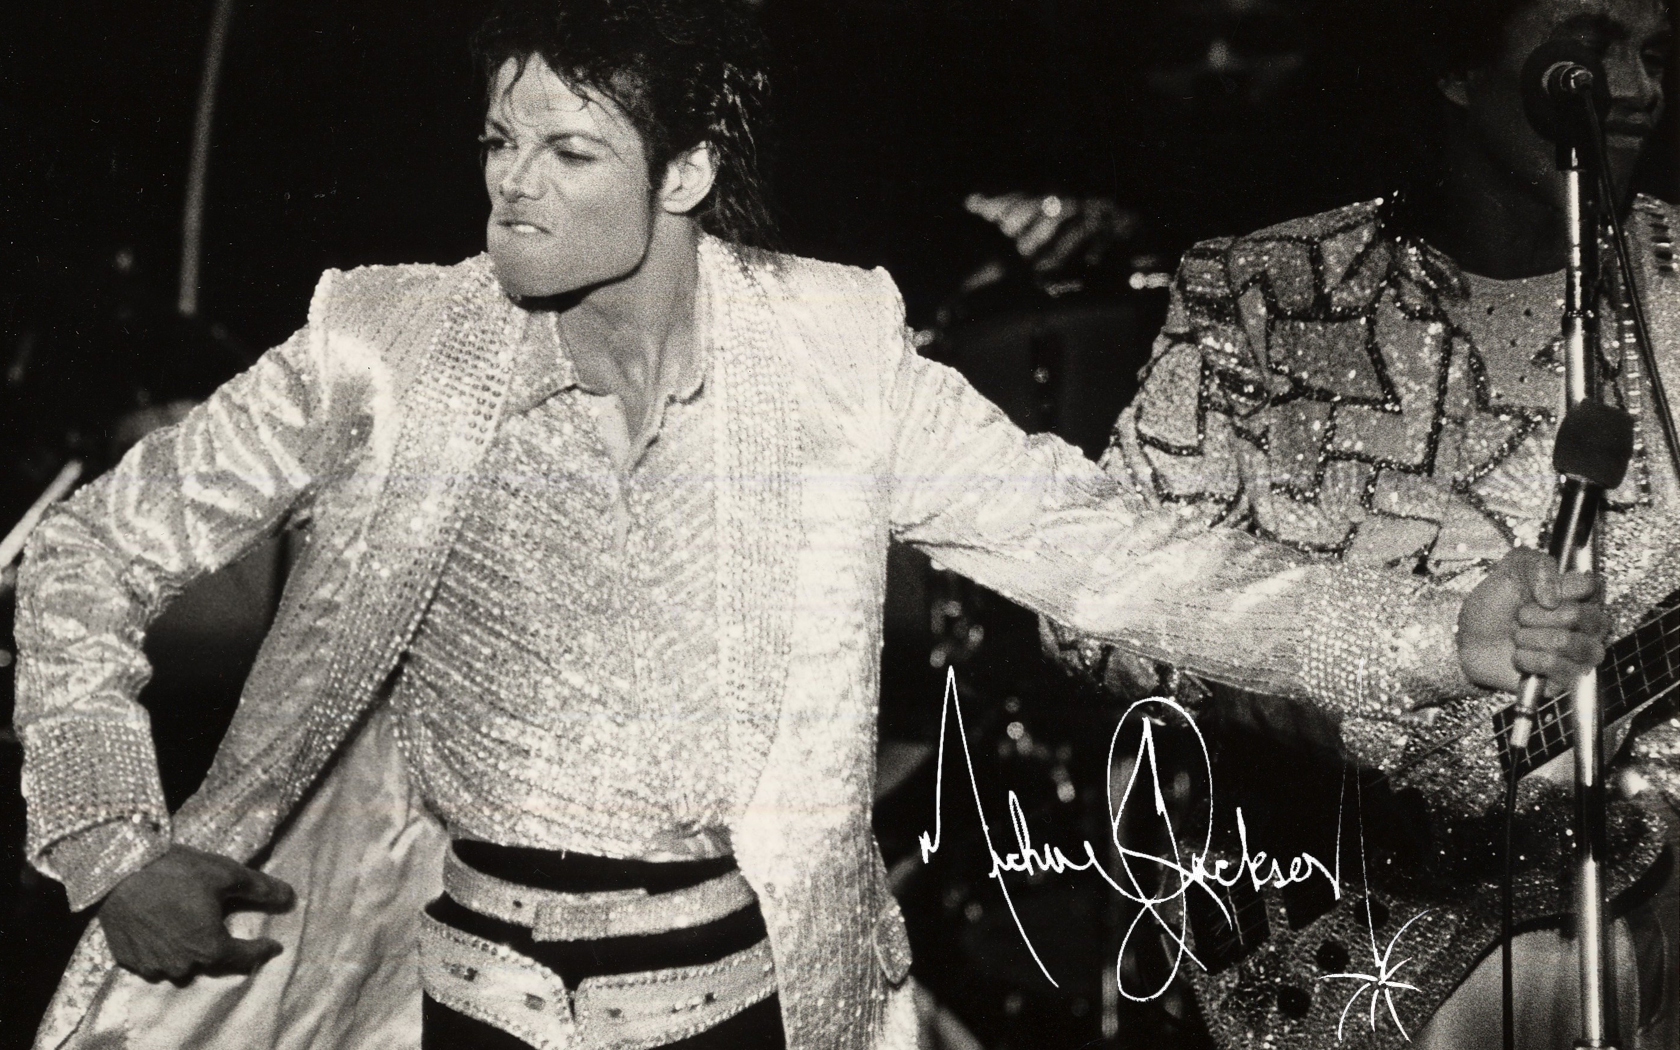 Michael_Jackson_tribute_wall04_by_frey84